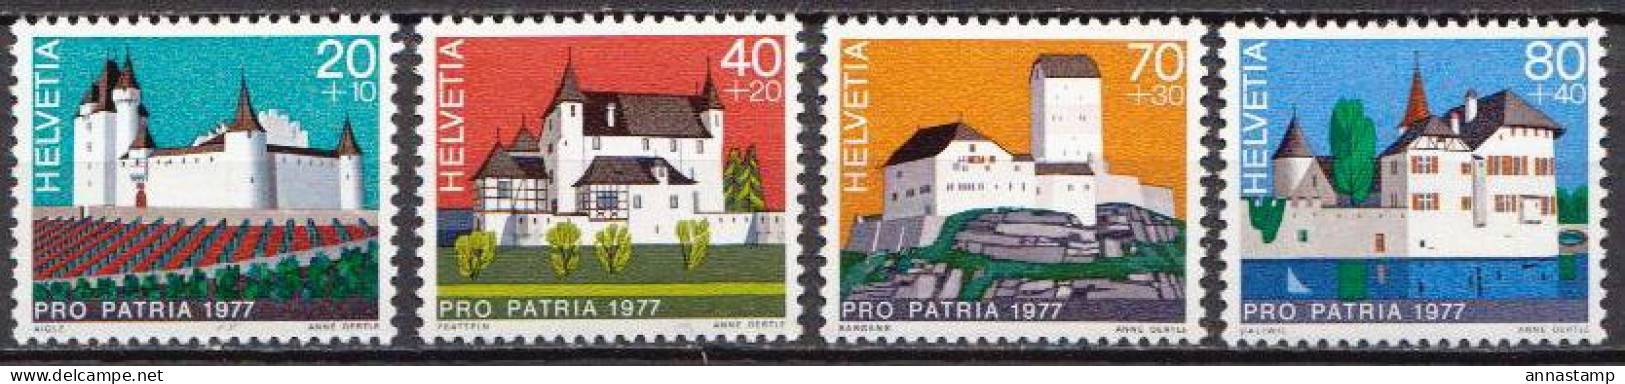 Switzerland MNH Set - Castles